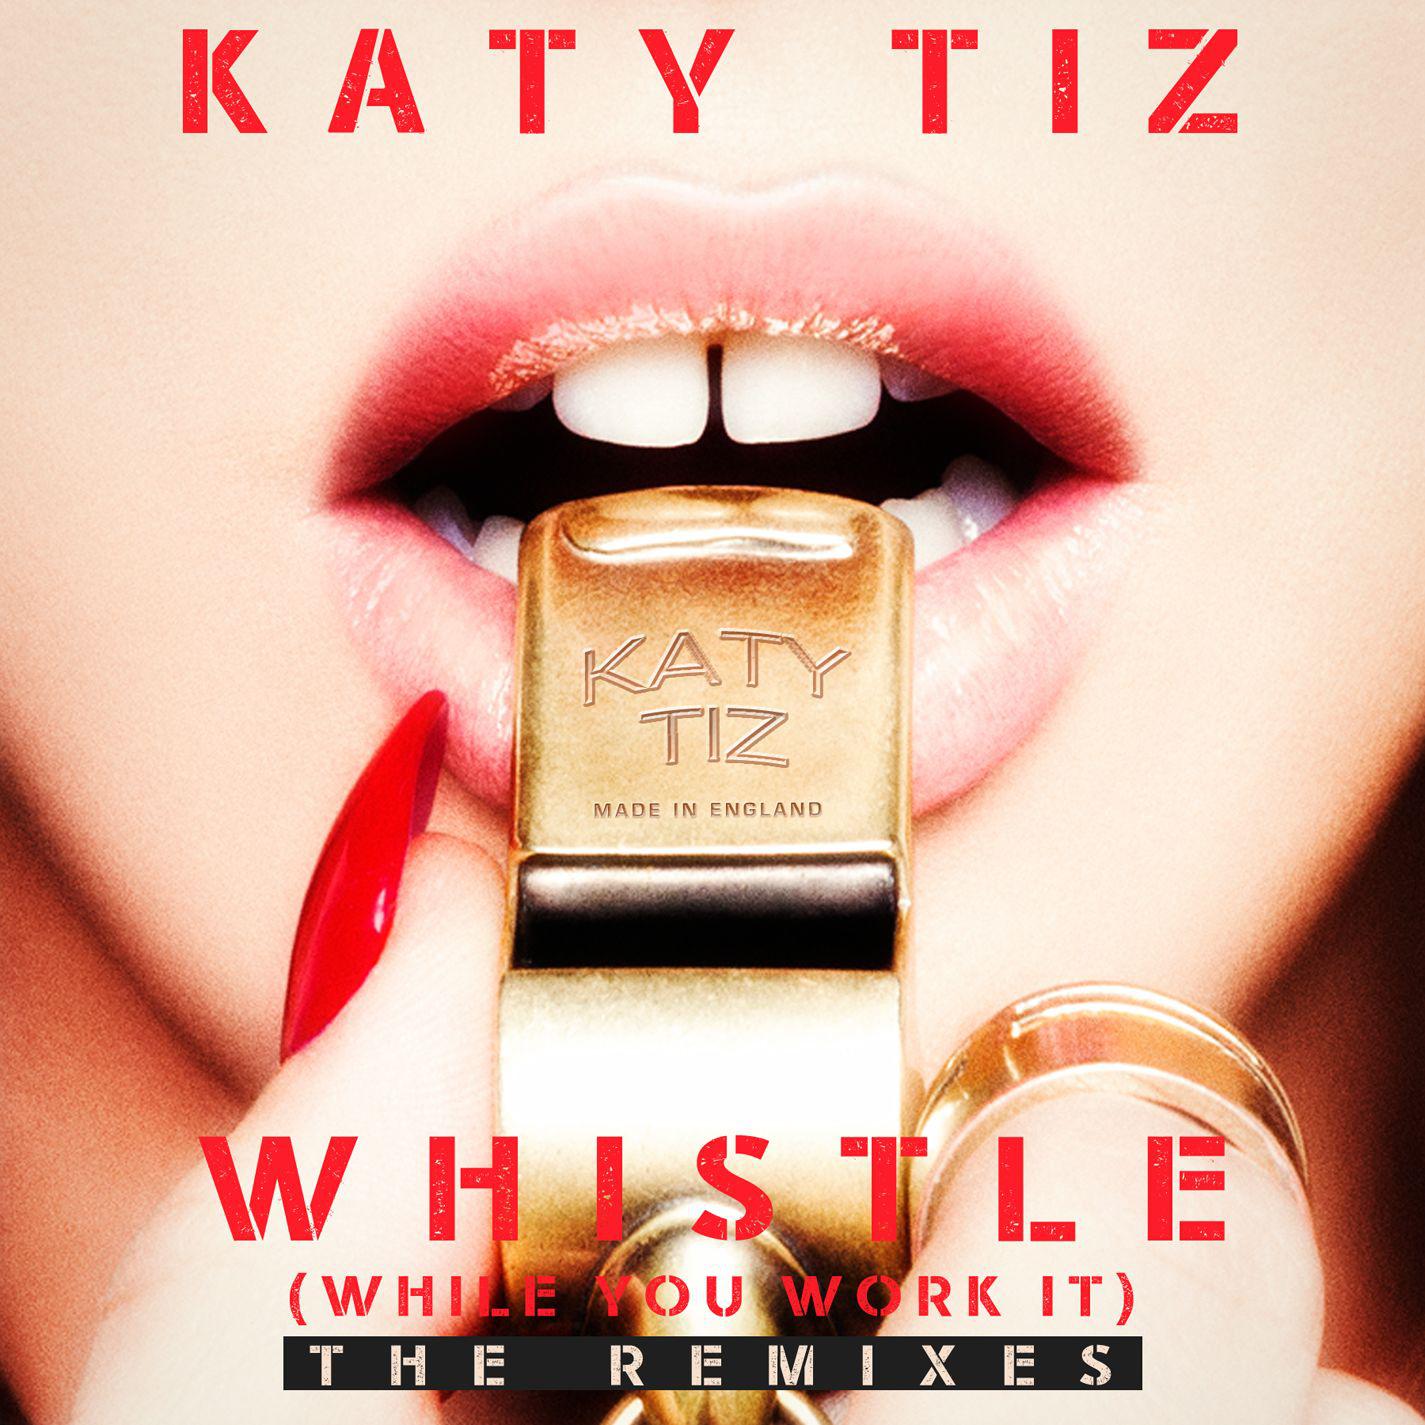 Katy Tiz - Whistle (While You Work It) [Wiwek Remix]